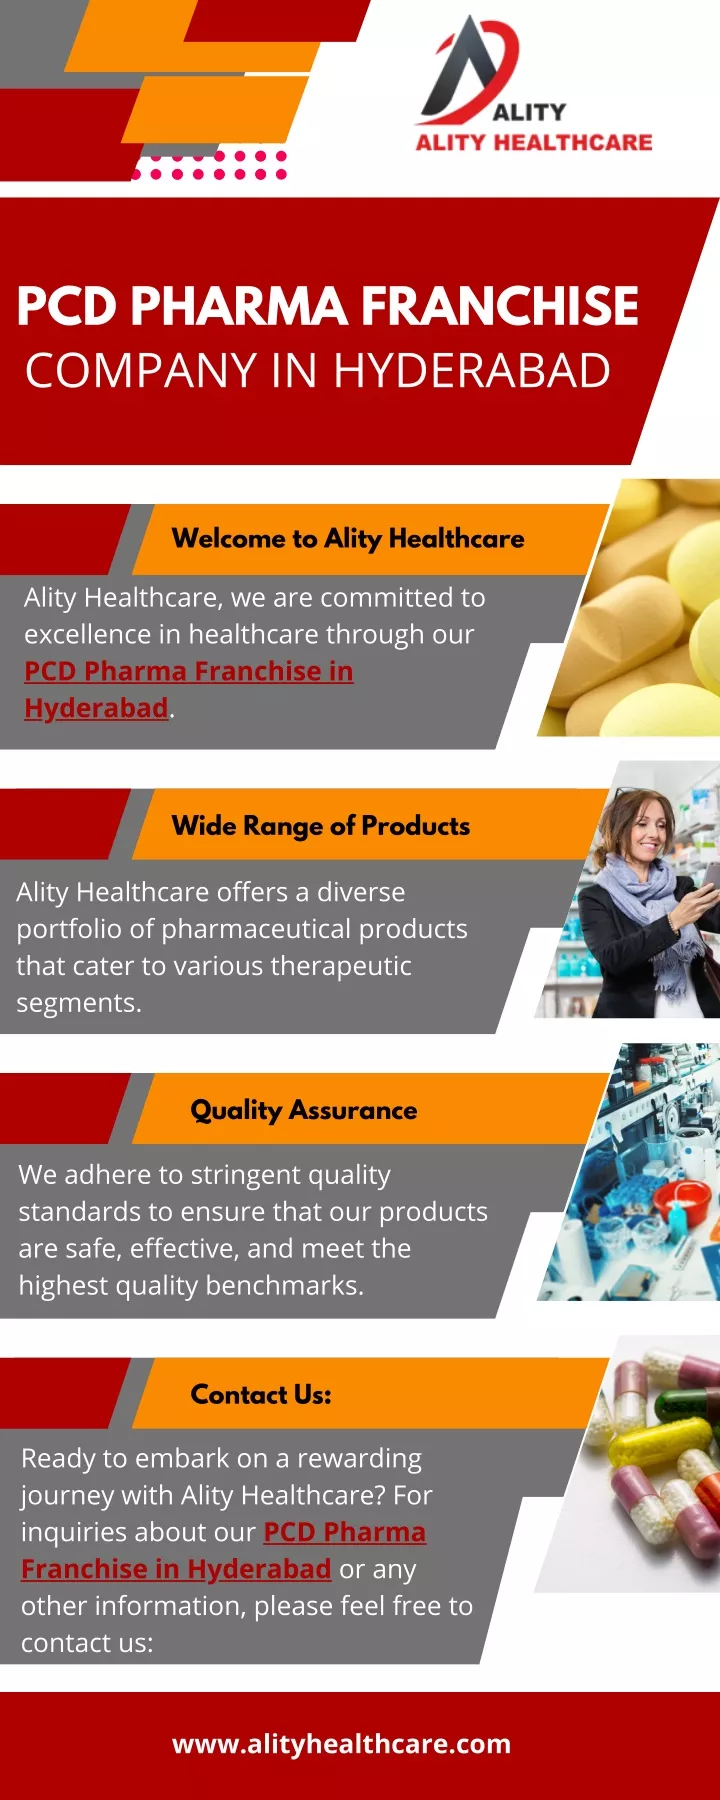 pcd pharma franchise company in hyderabad